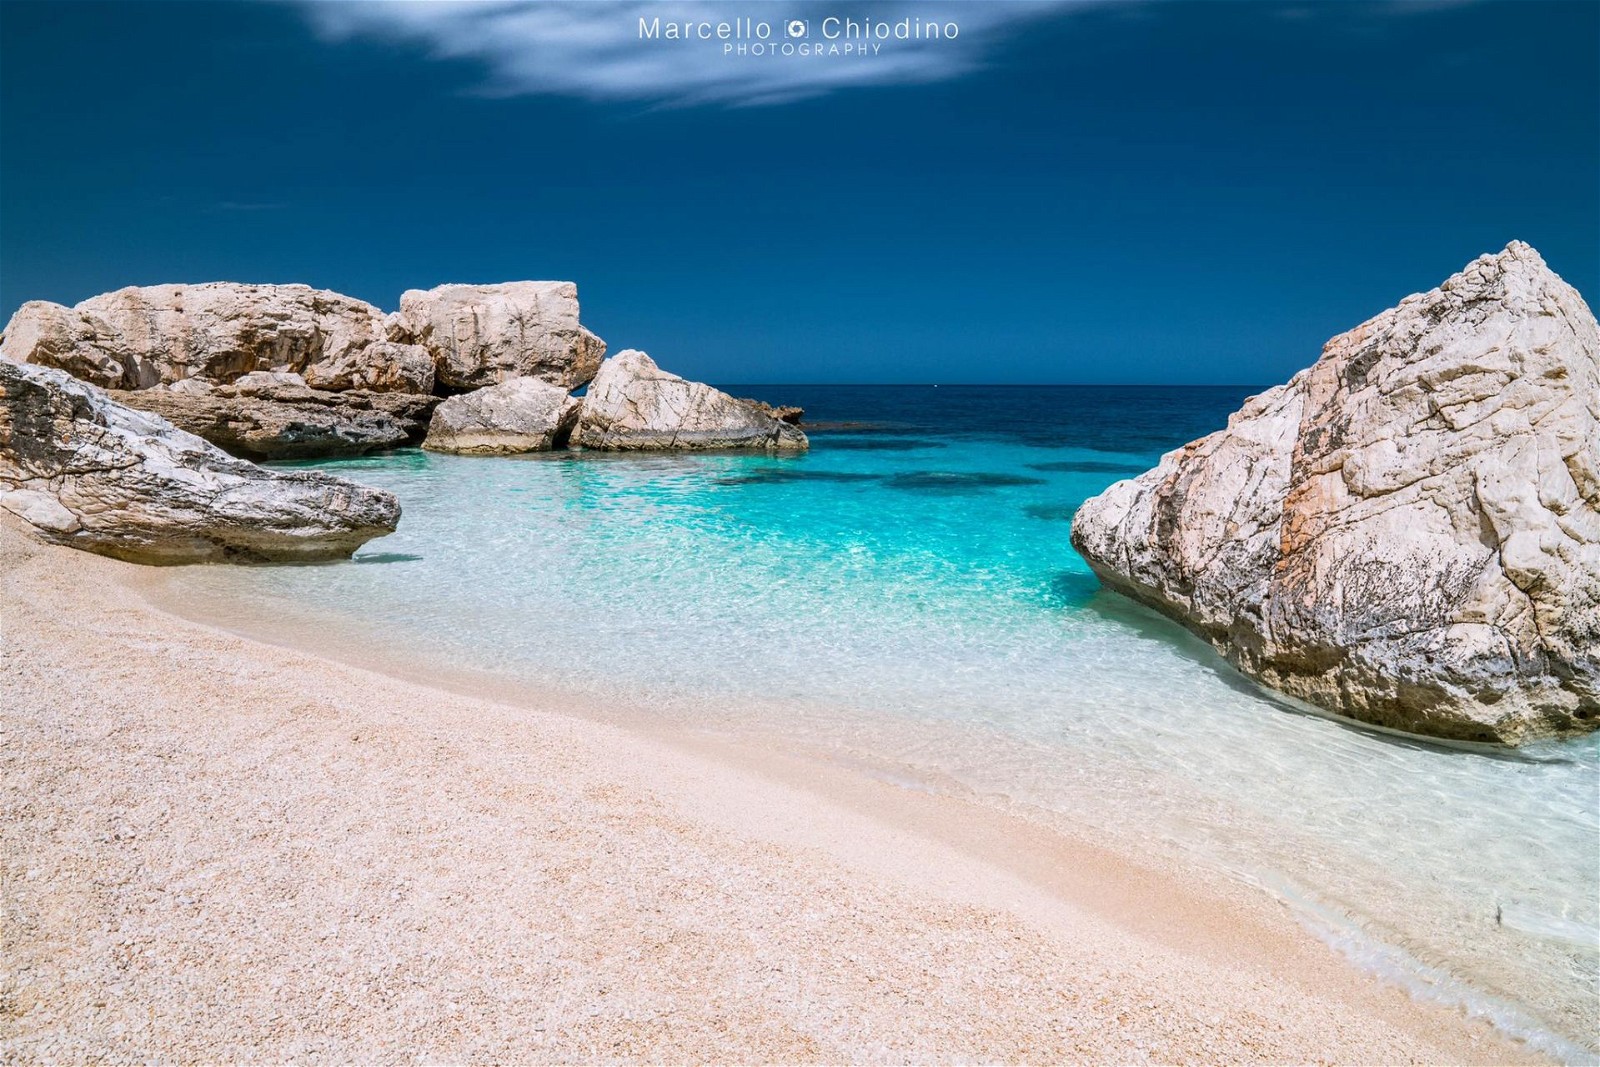 Cala Mariolu: Cala Mariolu, situated in the Gulf of Orosei on the northeastern coast of Sardinia, is another unique beach.